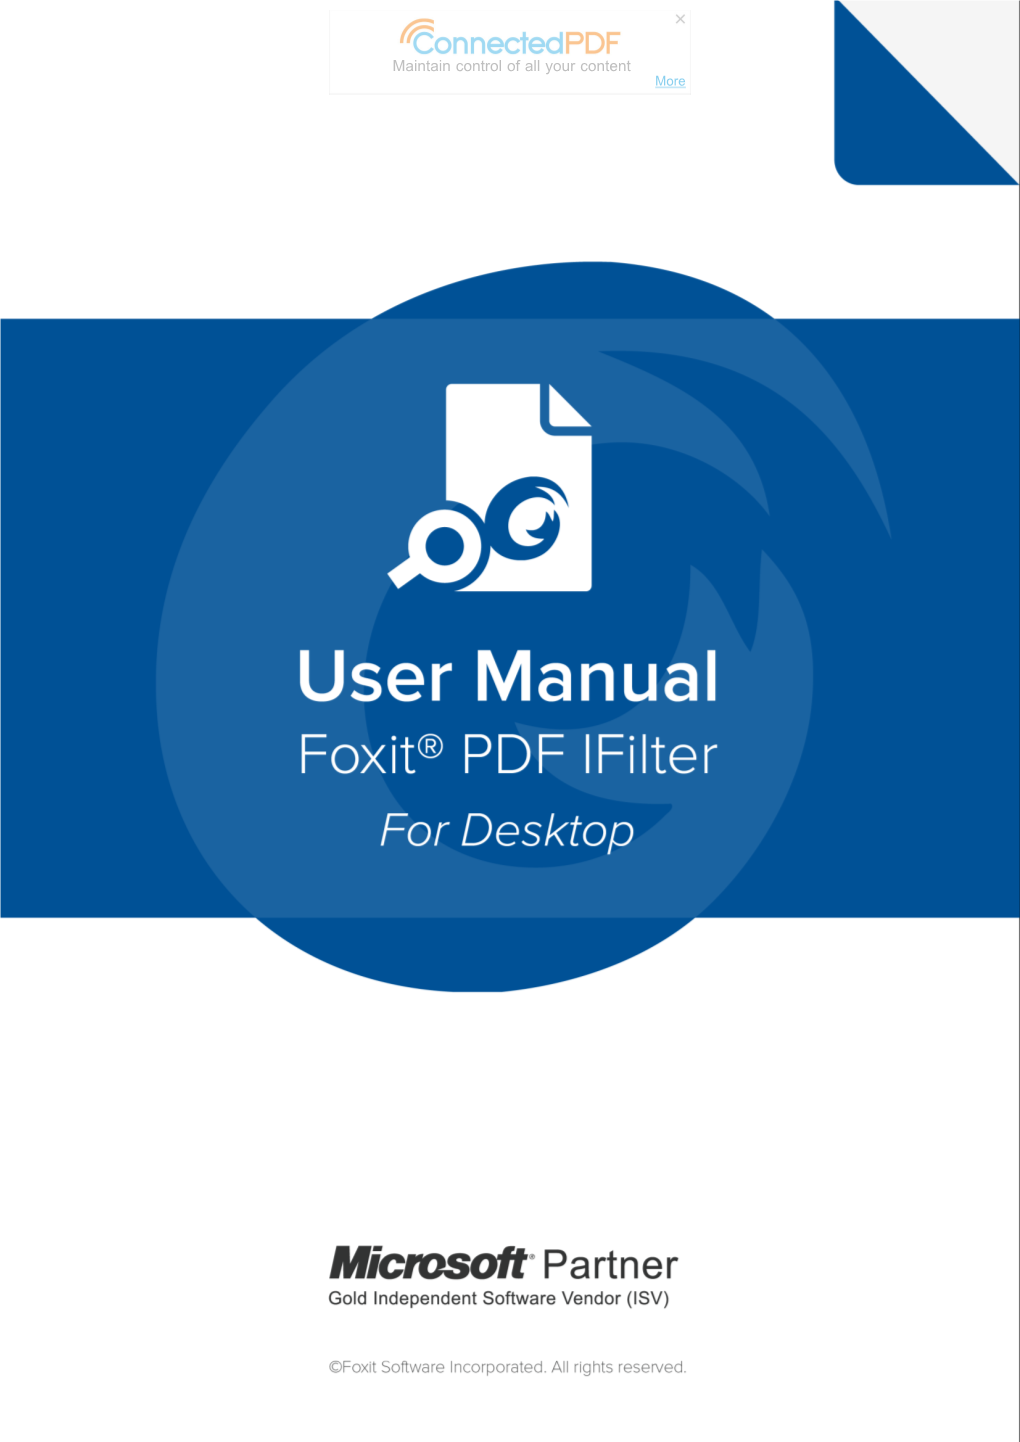 Foxit PDF Ifilter for Desktop User Manual